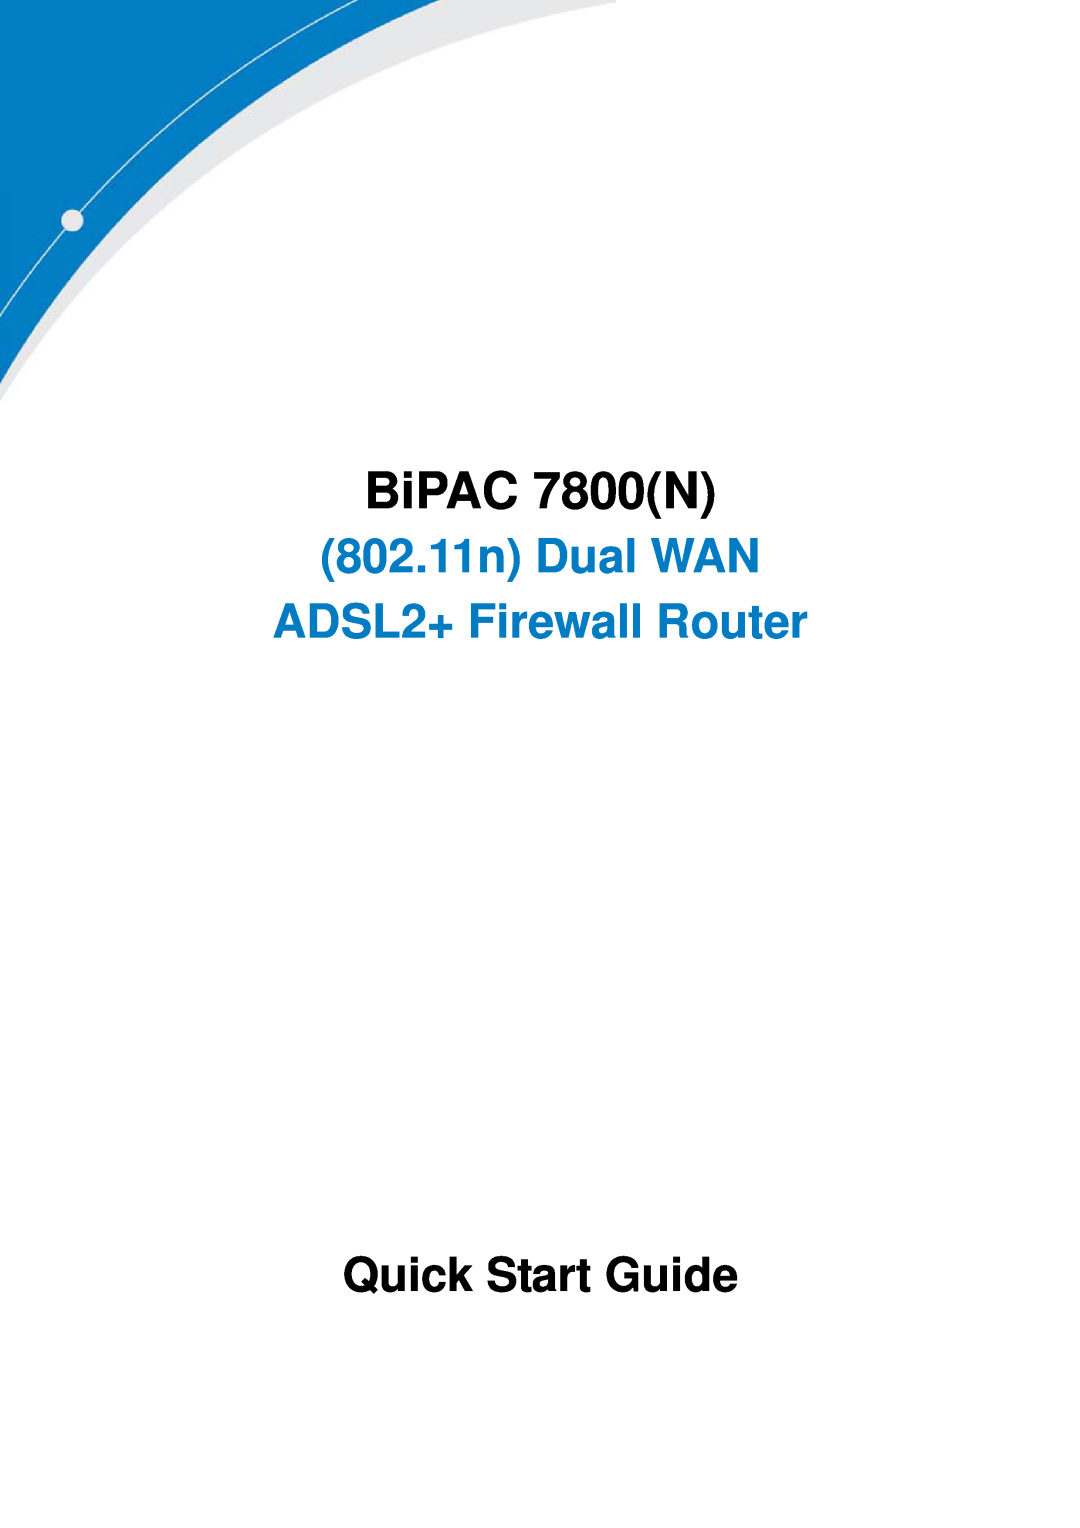 Billion Electric Company 7800(N) quick start BiPAC 7800N, 802.11n Dual WAN ADSL2+ Firewall Router, Quick Start Guide 